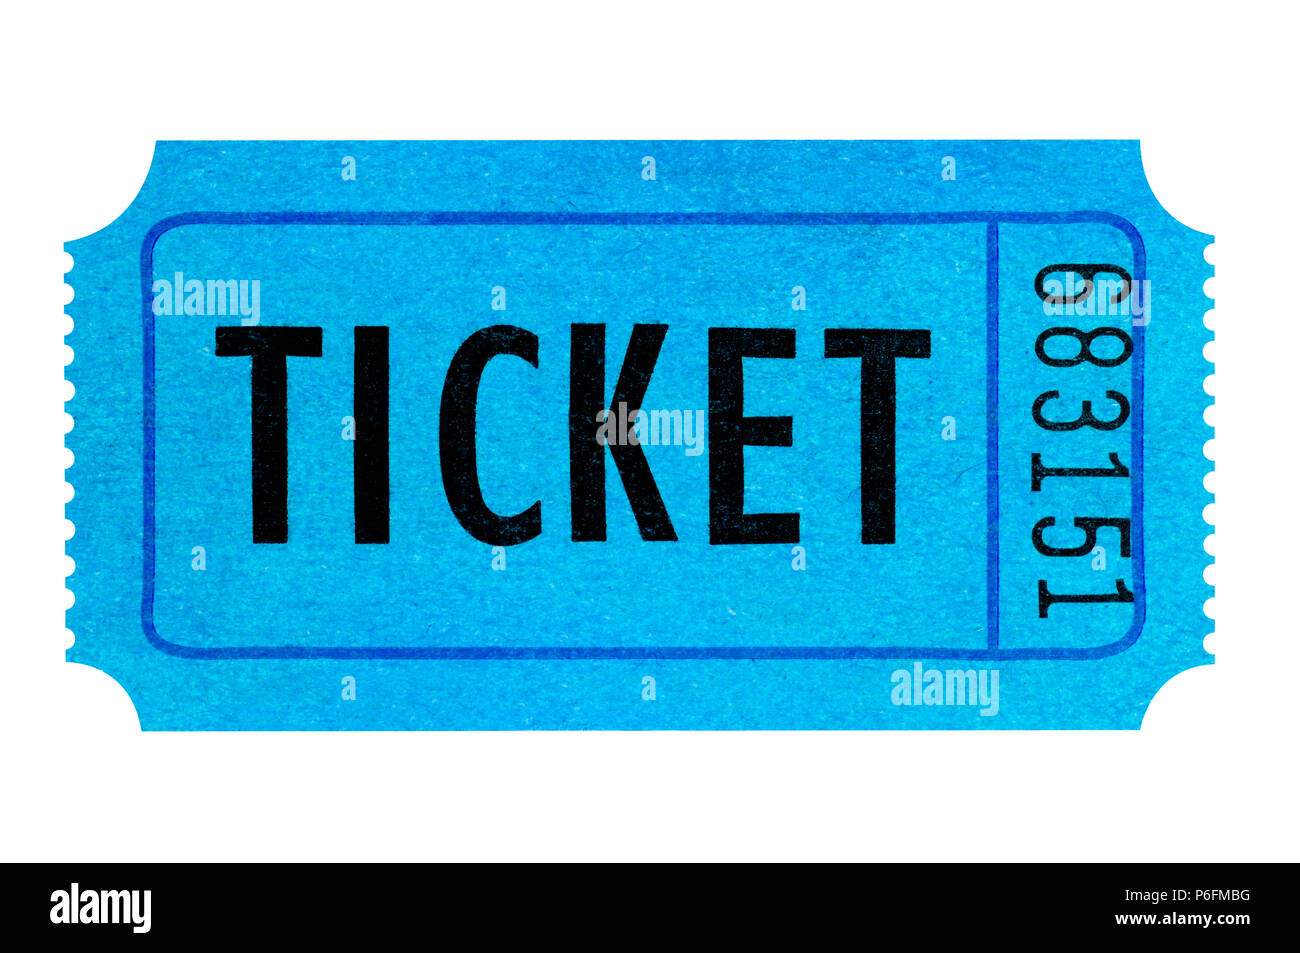 Blue ticket. Синий билет. Билетик стоковое изображение. Билет PNG. Билет картинка на прозрачном фоне.